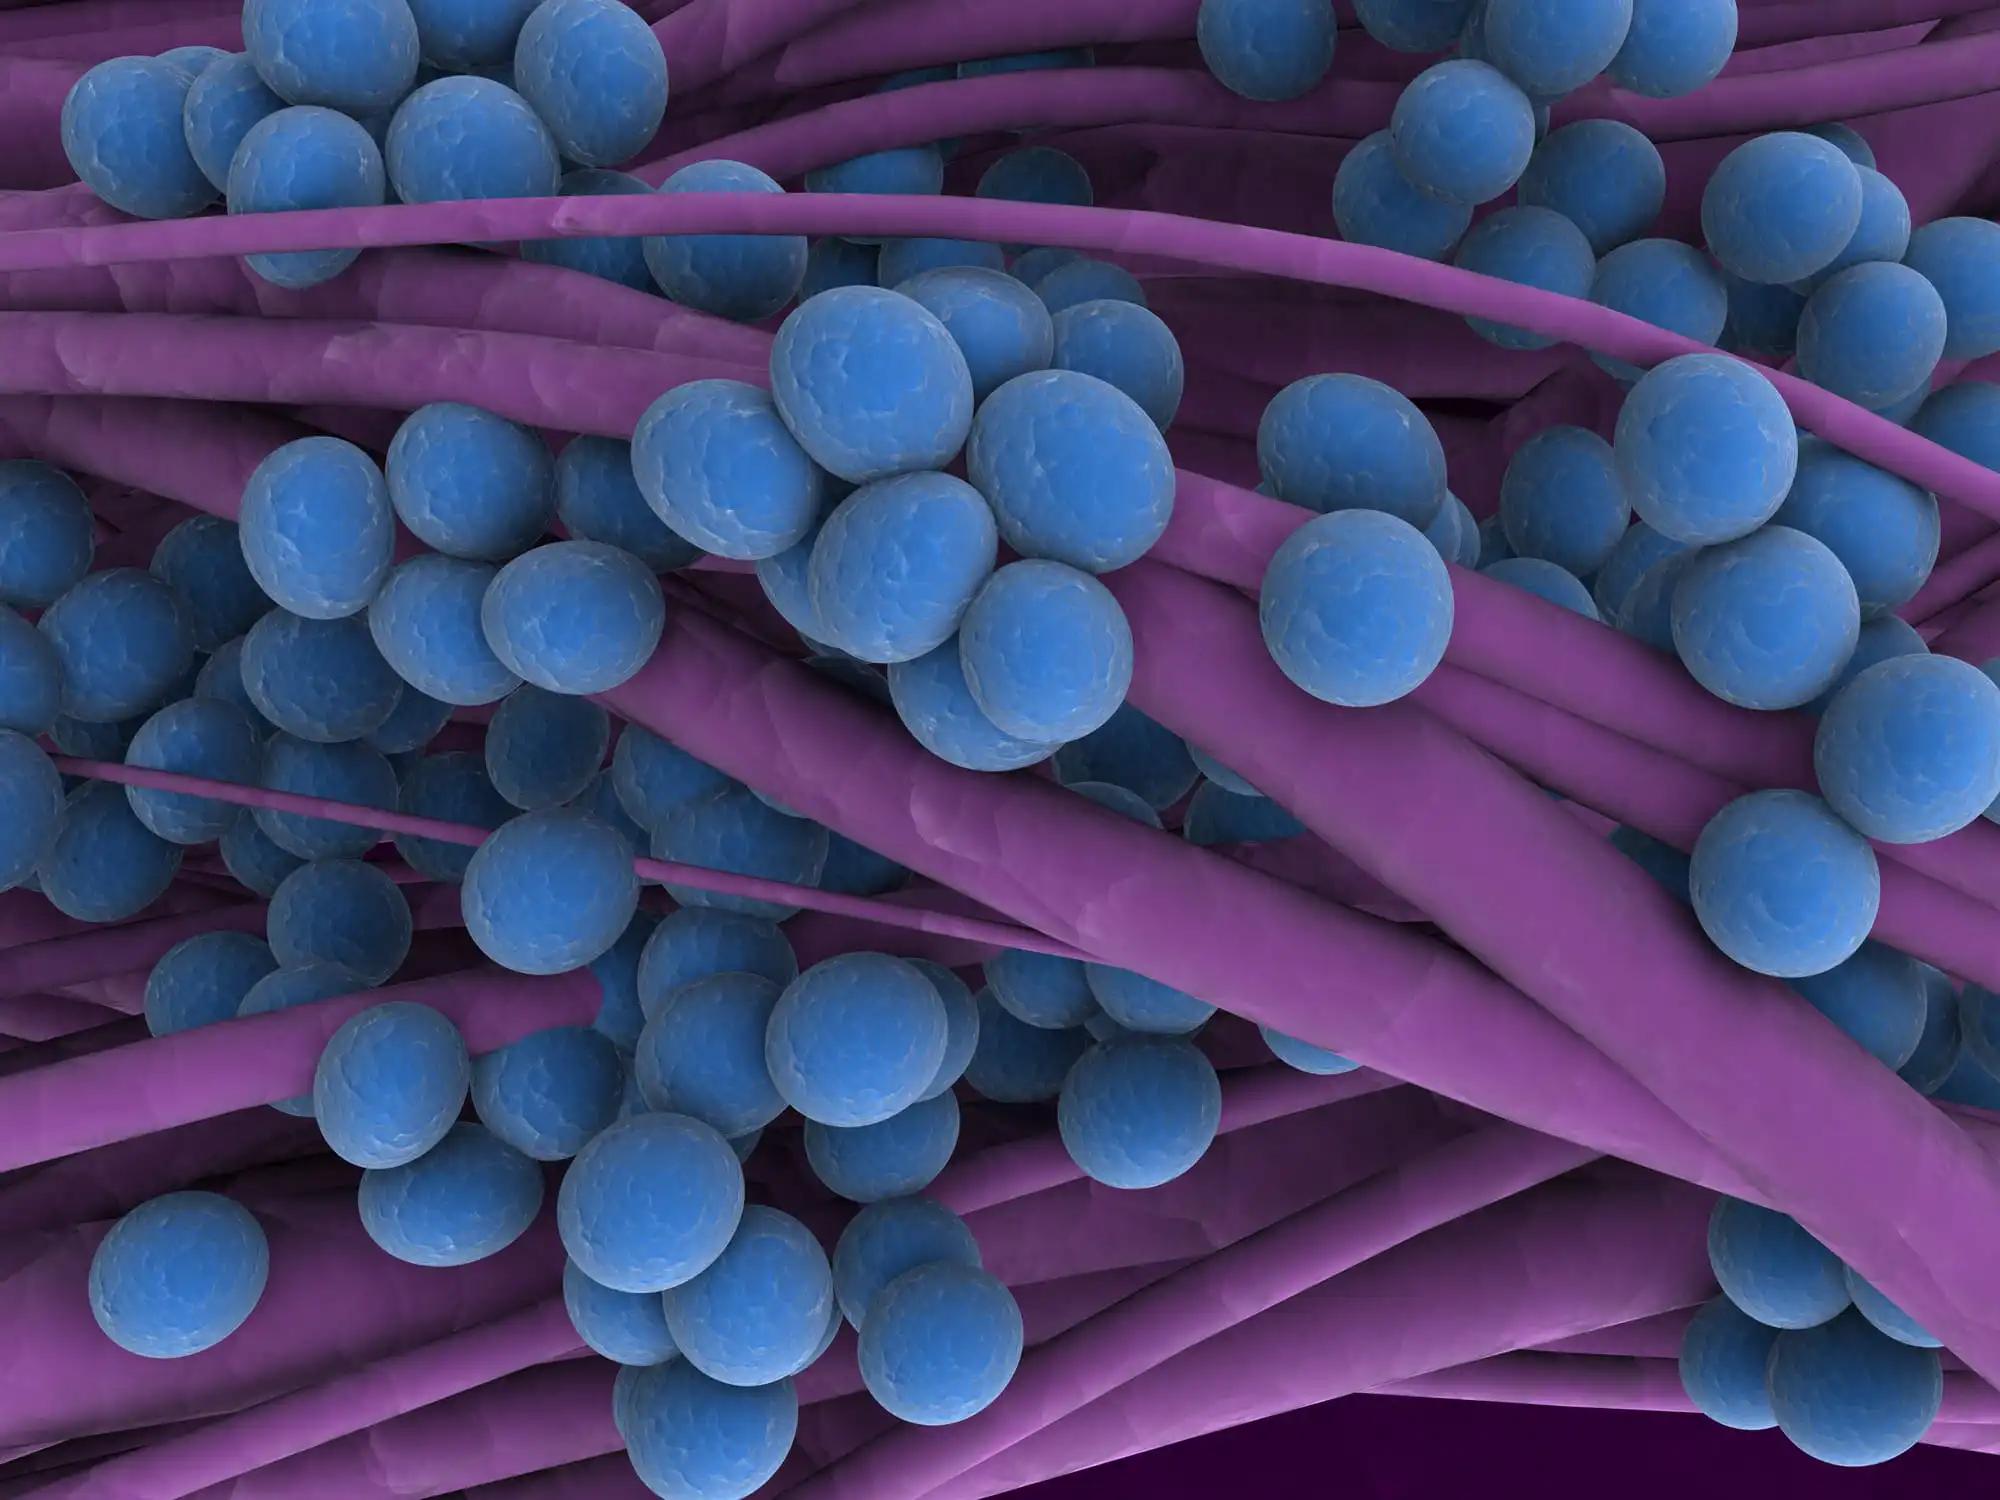 Staphylococcus Bacteria Under Microscope